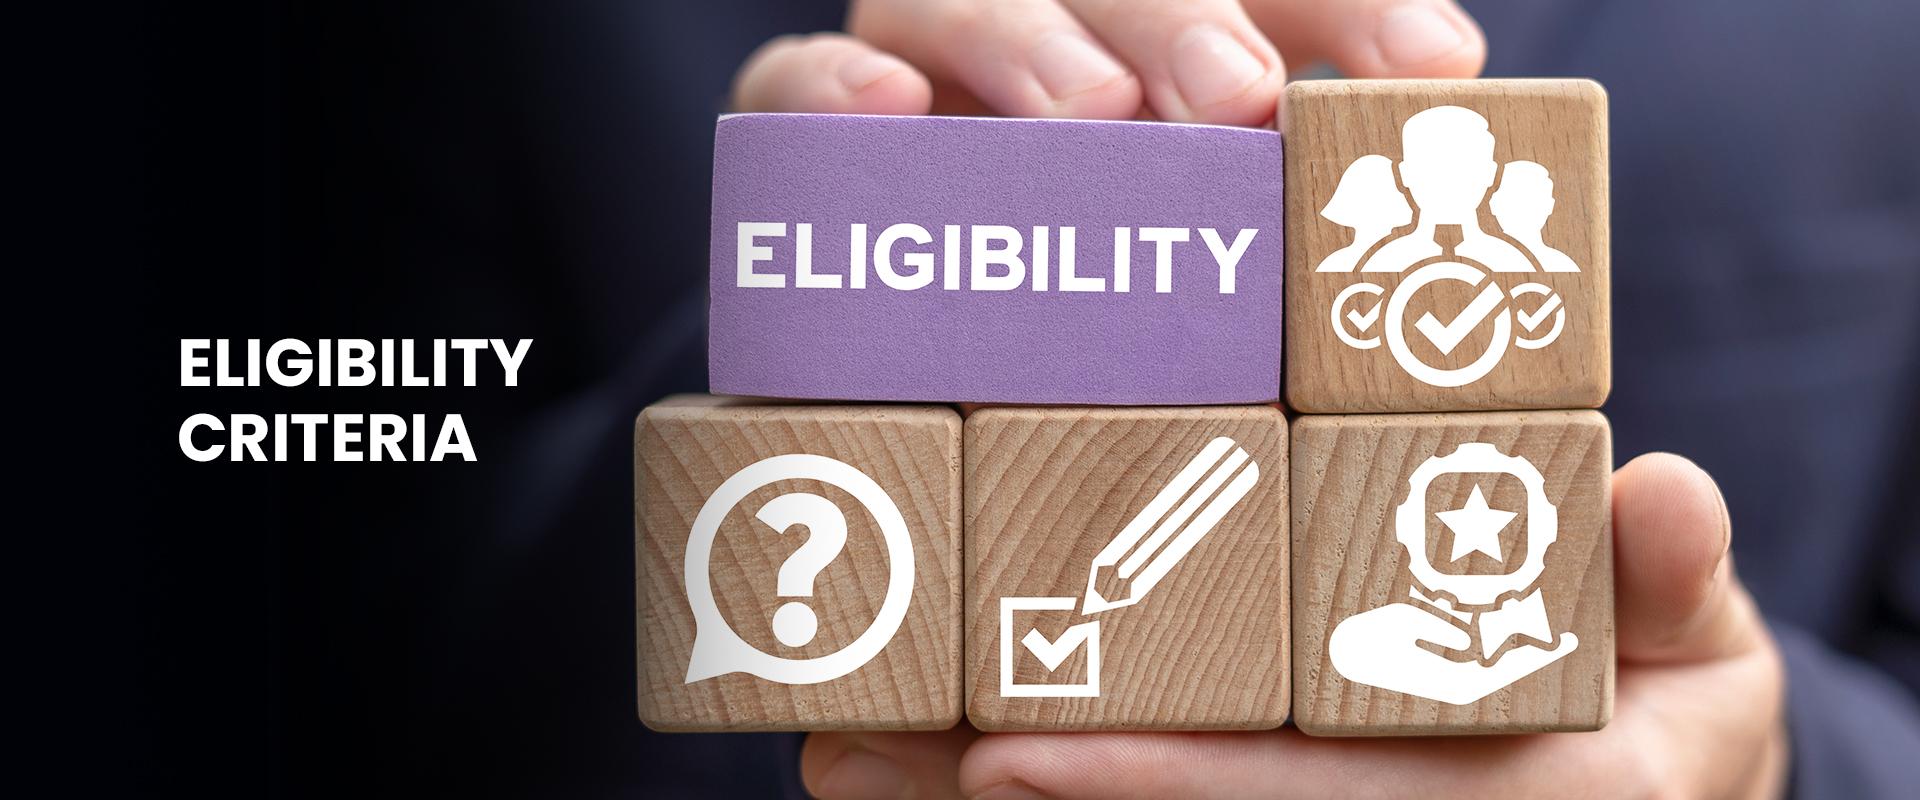 Key Information about Eligibility Criteria